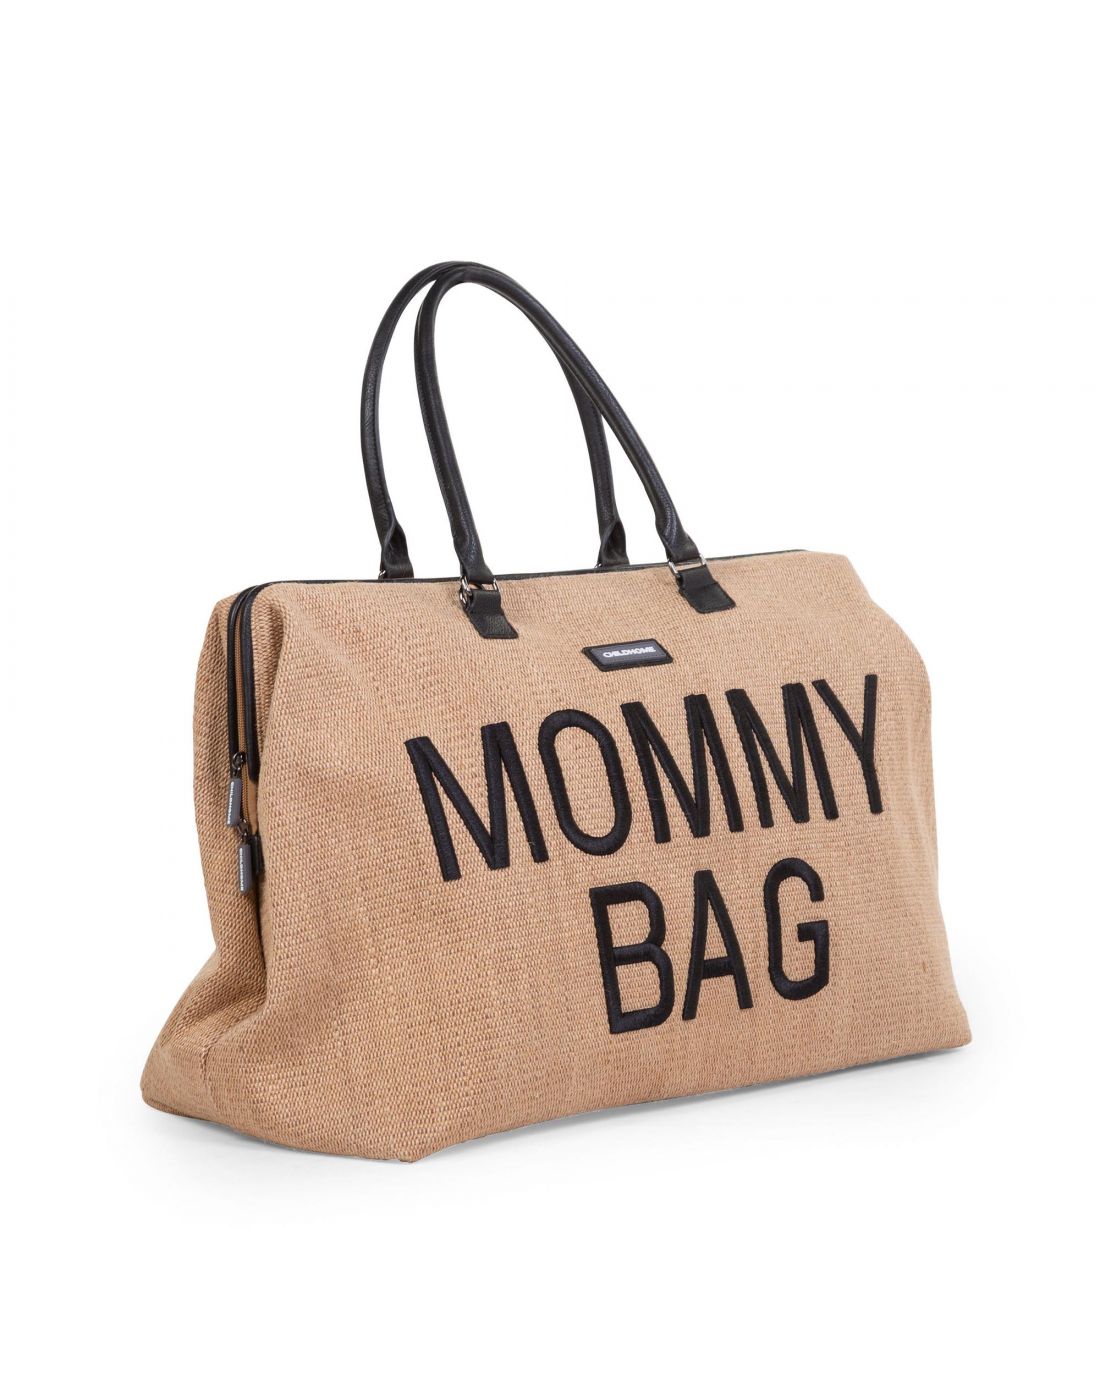 Childhome Mommy Bag Large Raffia